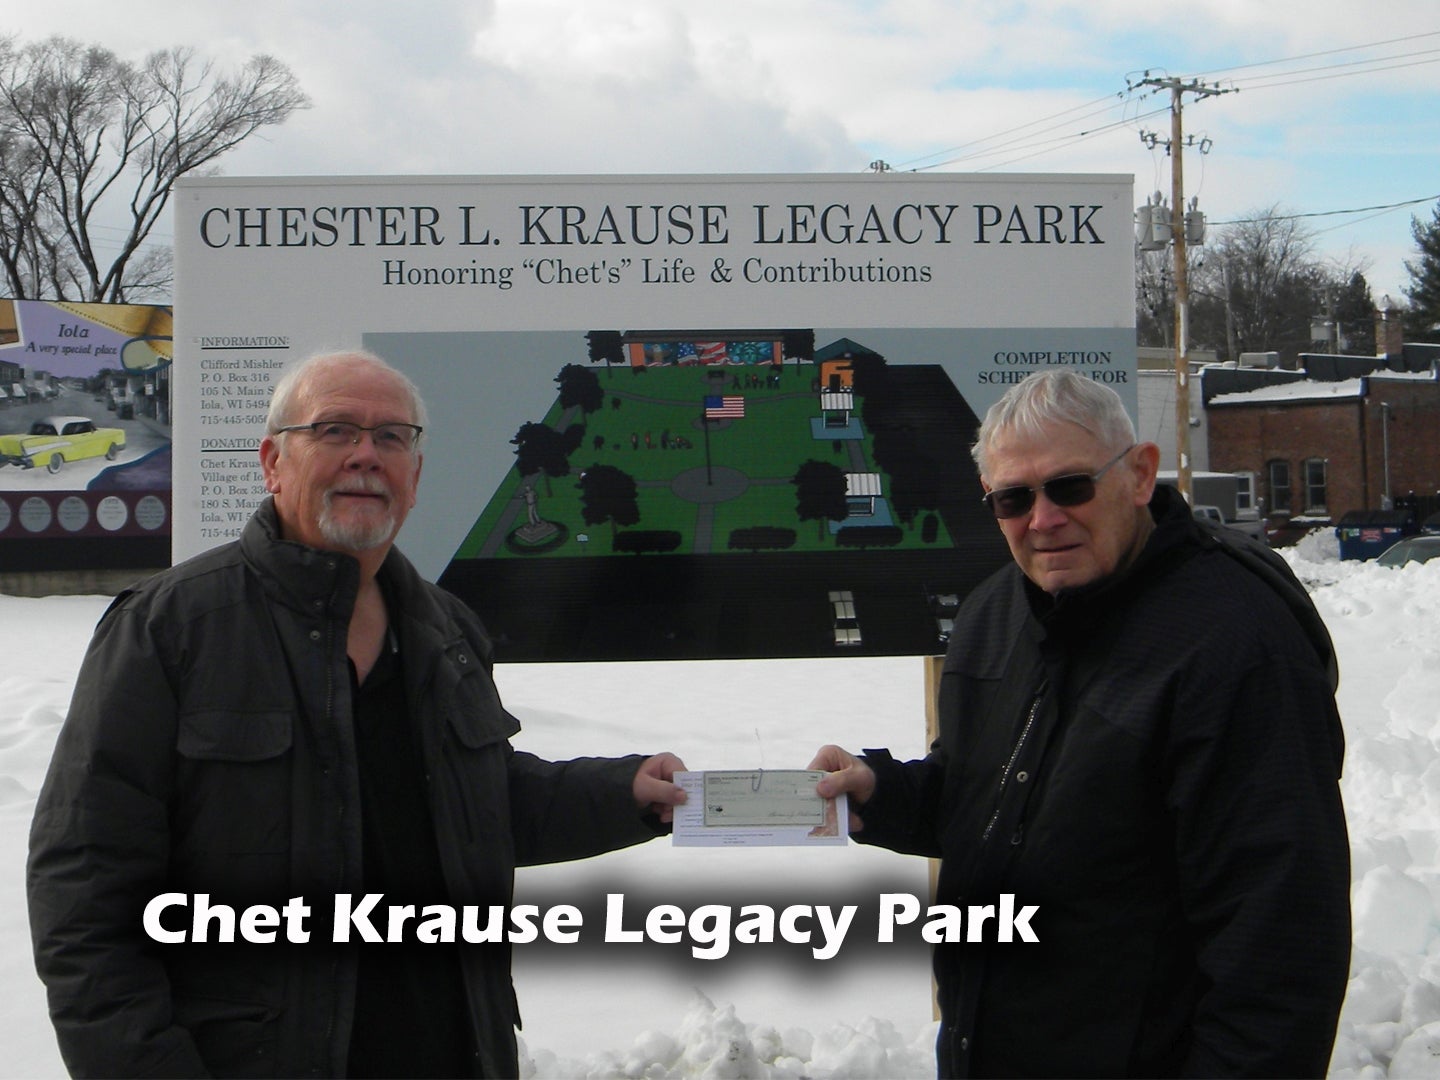 Chet Krause Legacy Park